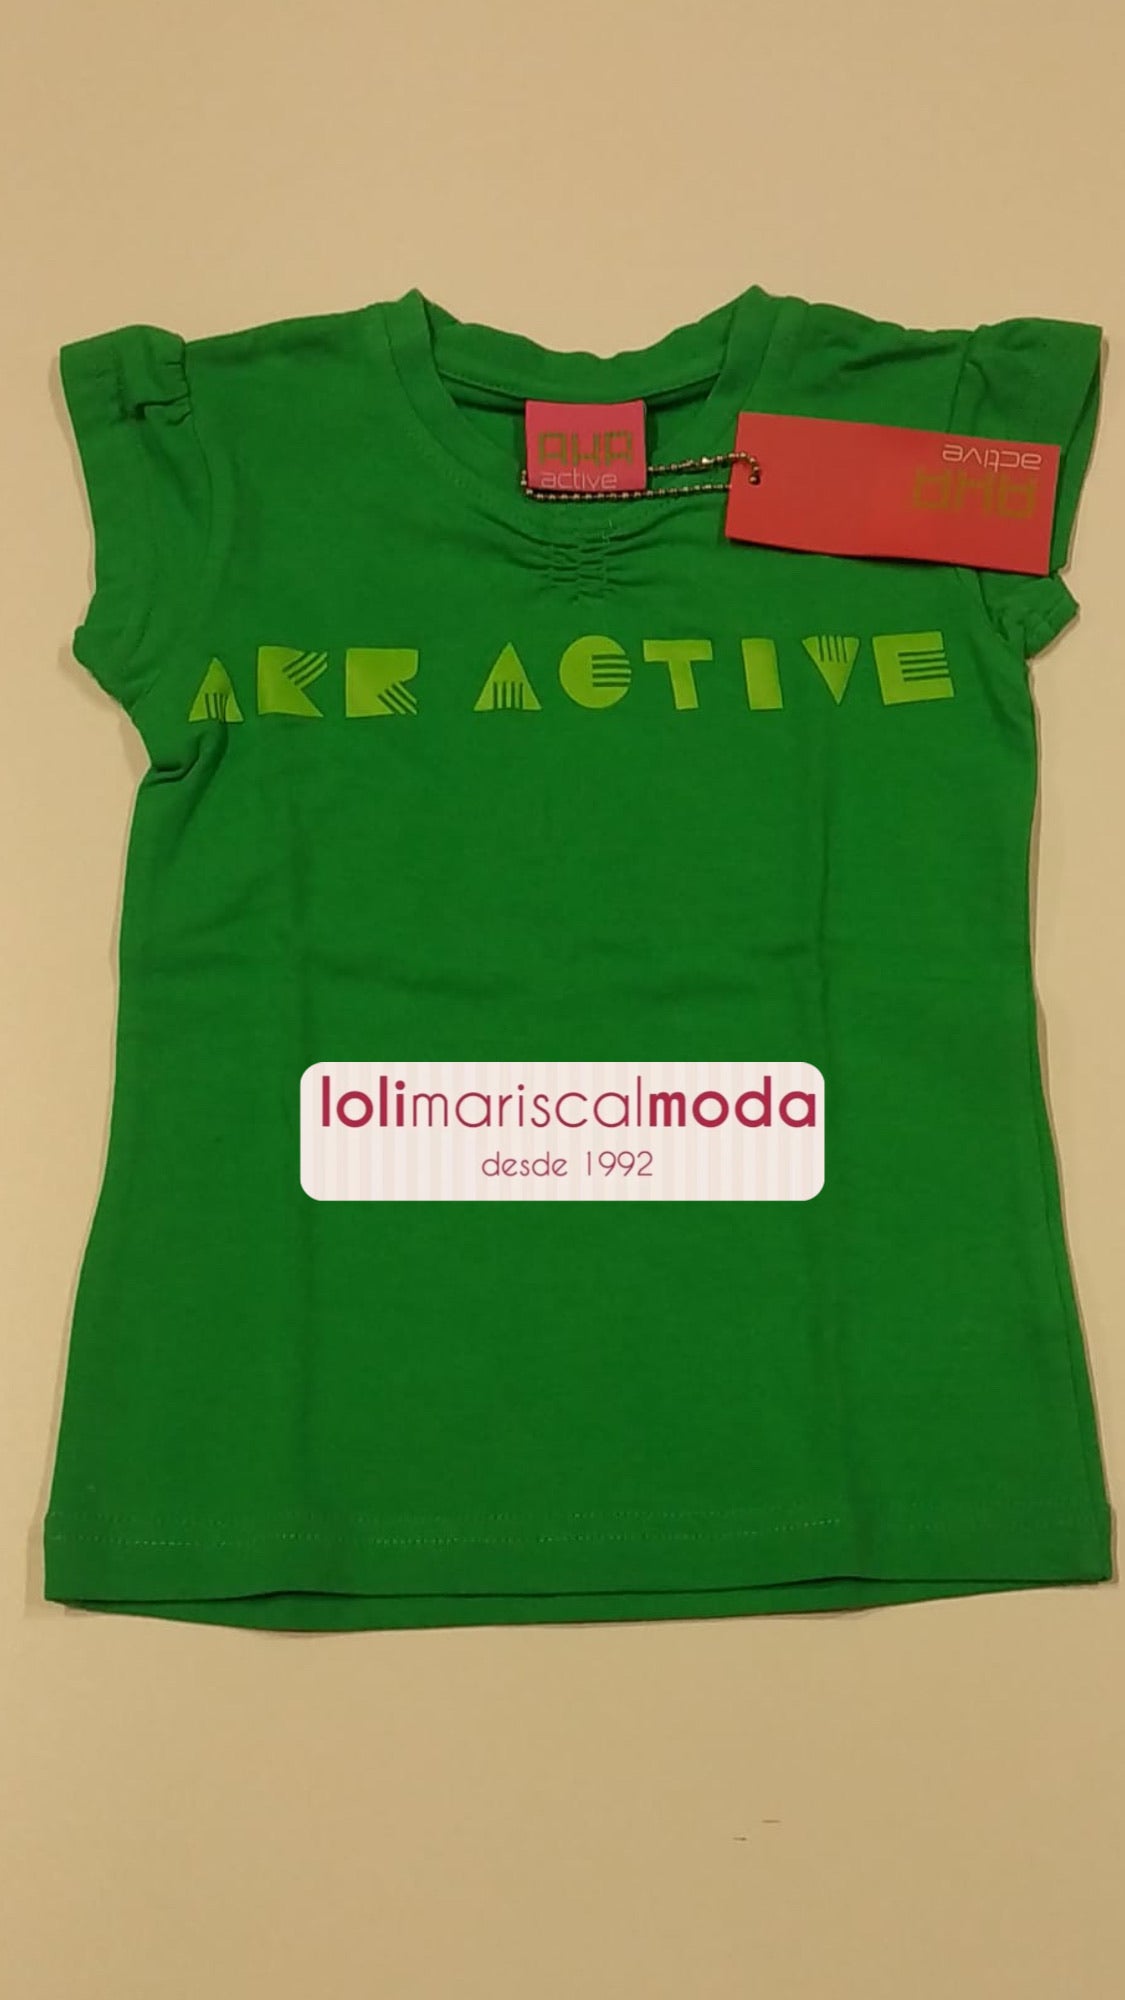 Camiseta niña Verde AKR lolimariscalmoda 4.95